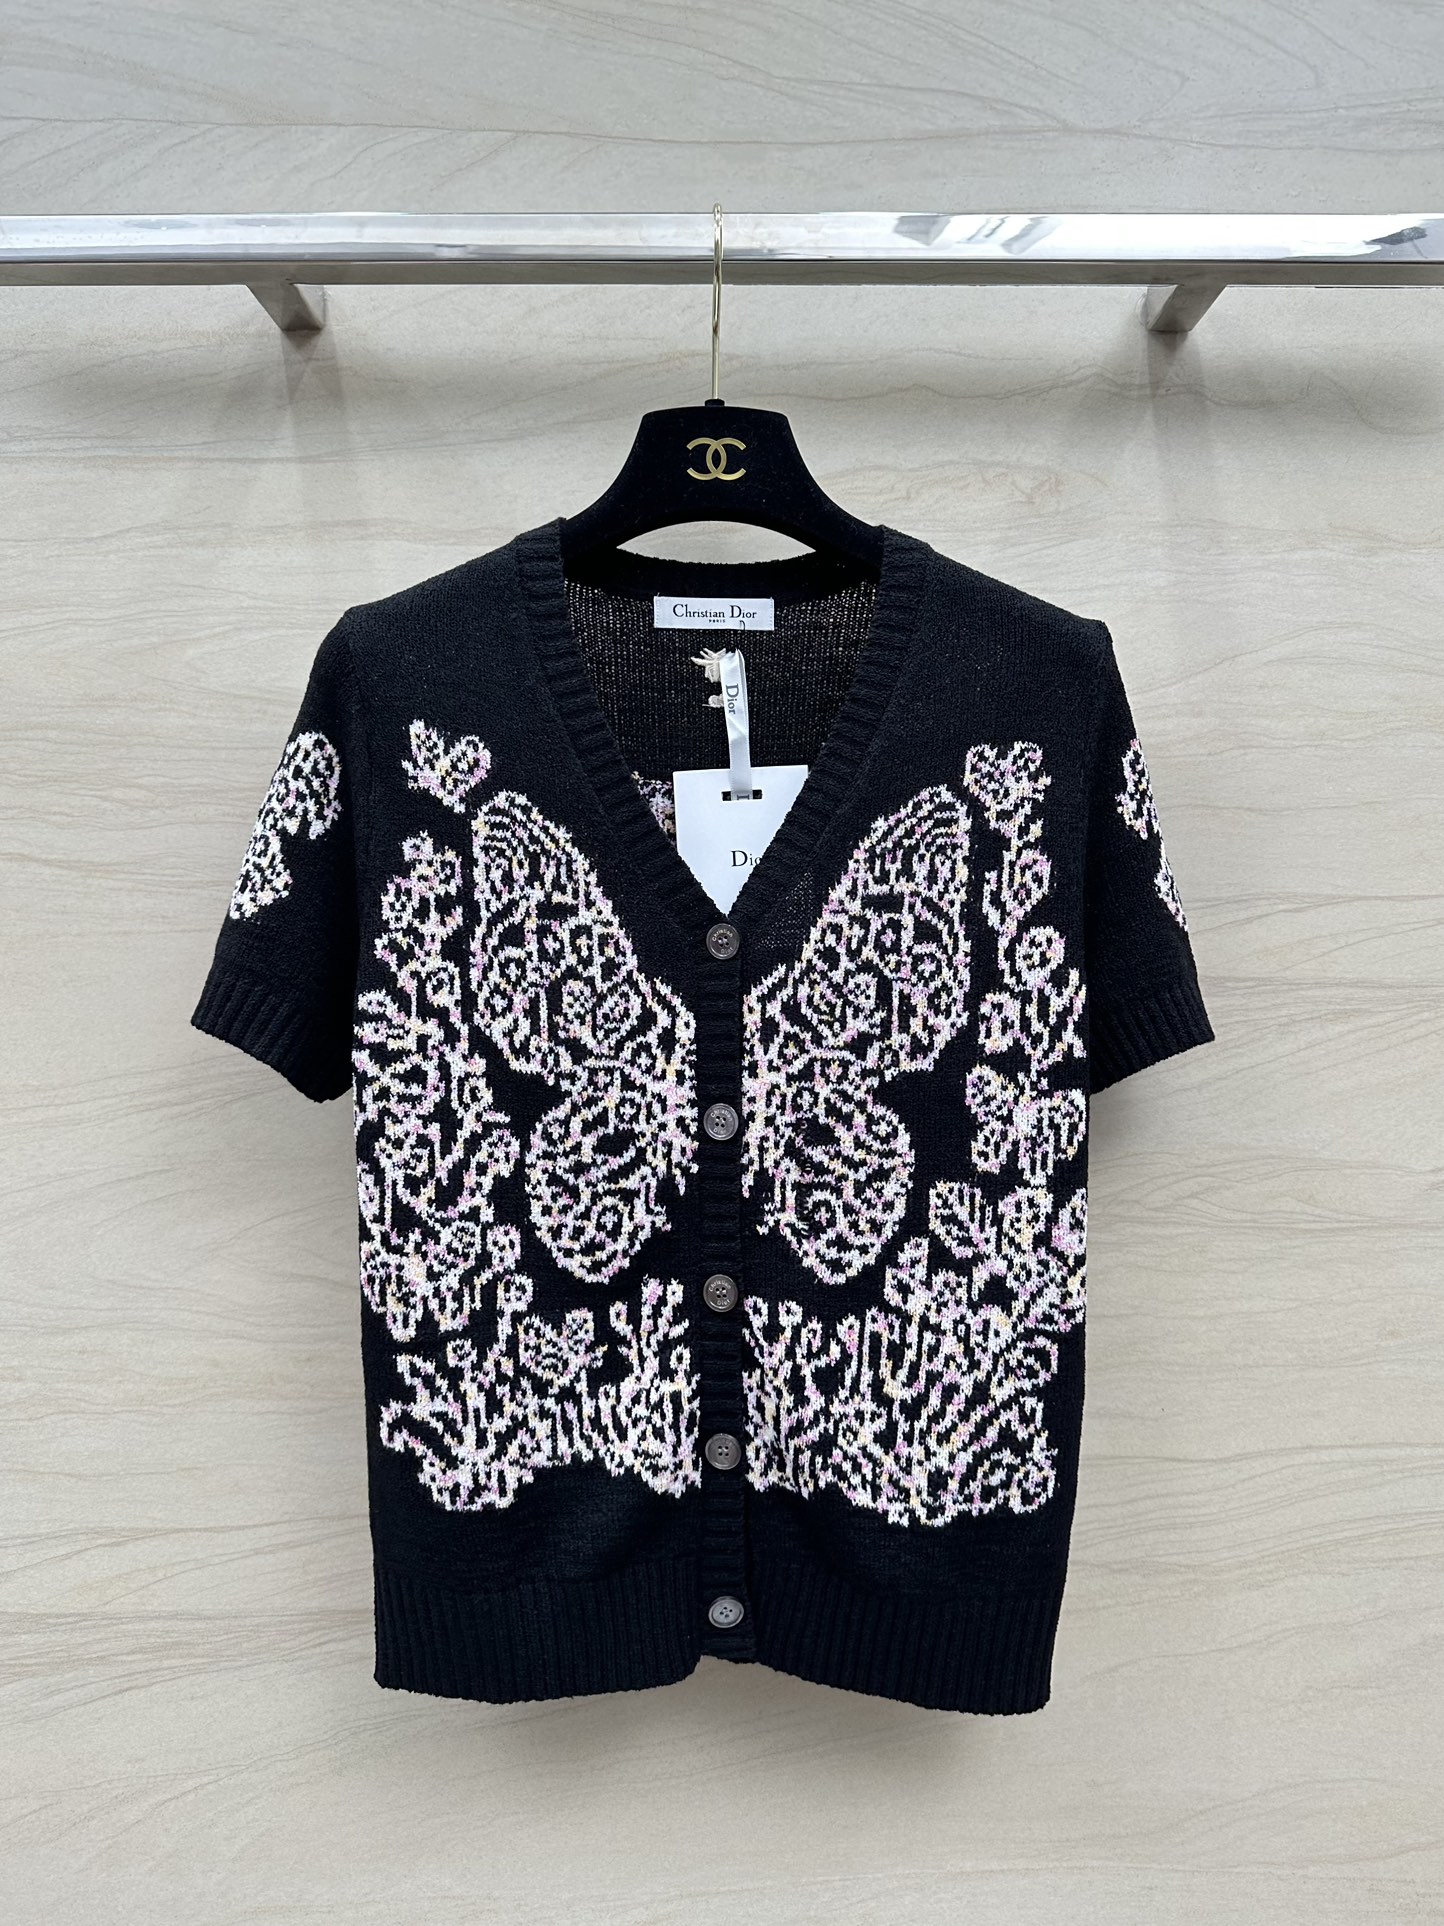 Dior Kleidung Hemden & Blusen Weiß Stickerei Kaschmir Stricken Weben Frühlingskollektion